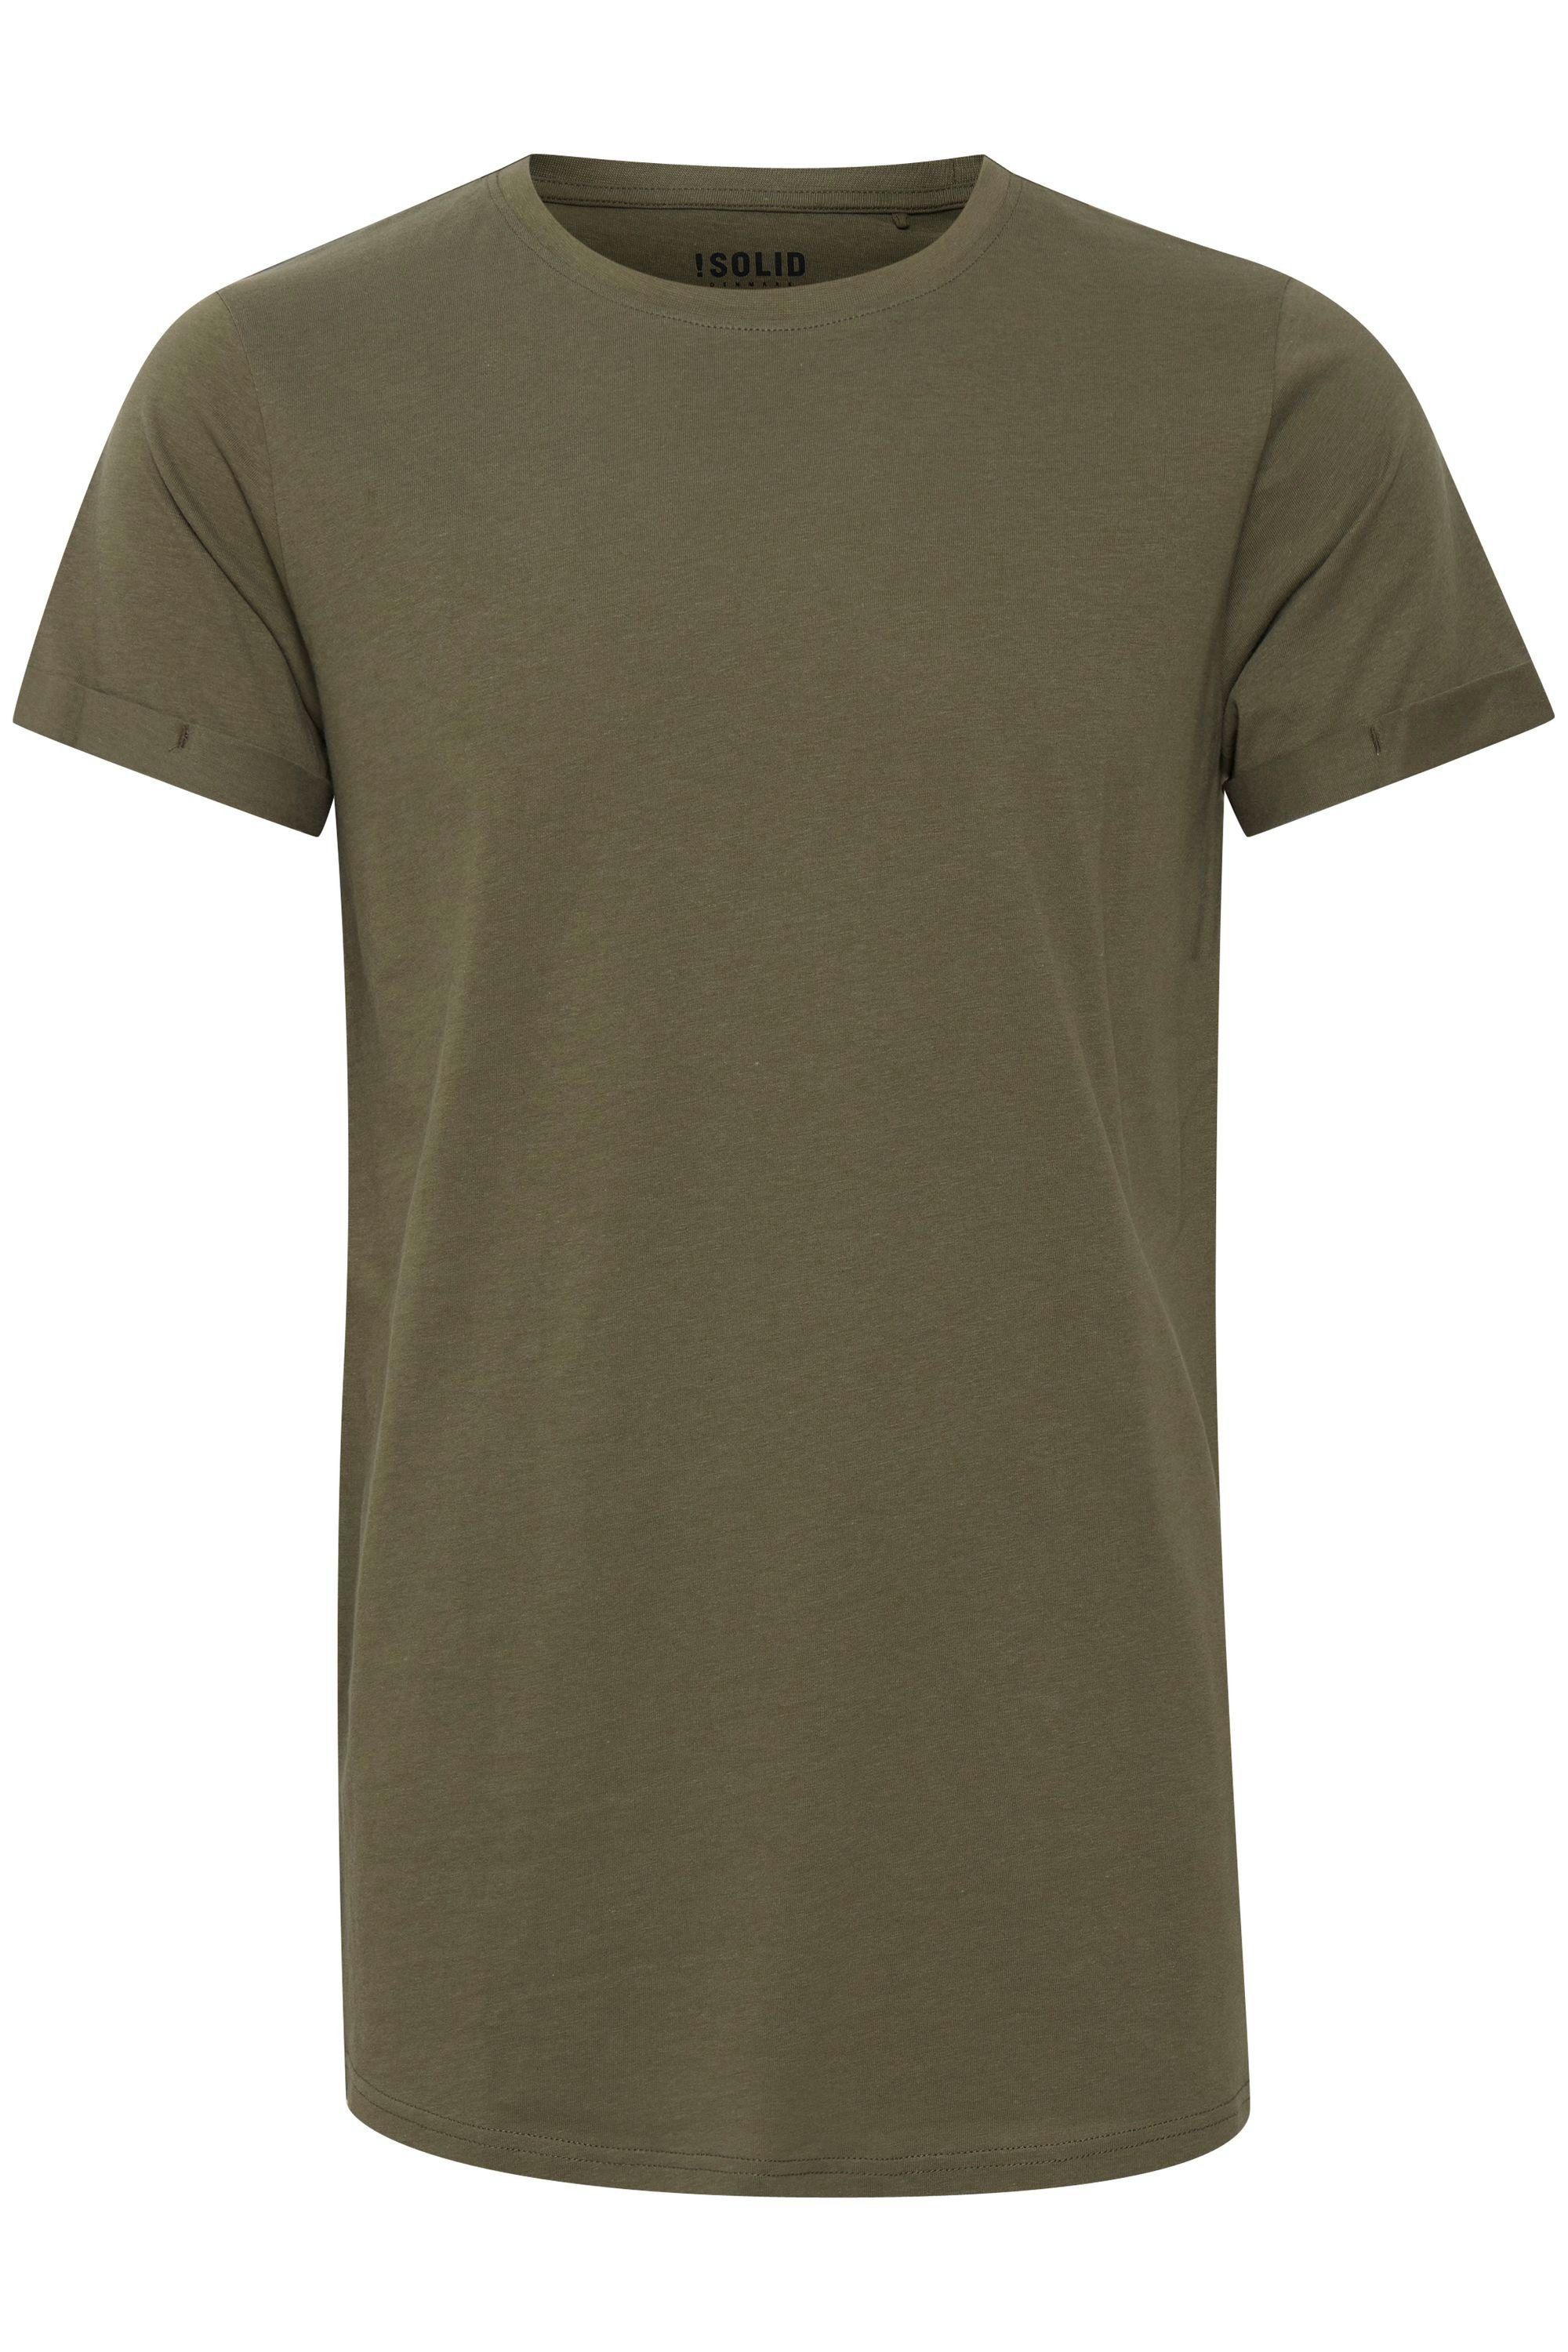 !Solid Longshirt SDLongo T-Shirt Ivy Green (190512)